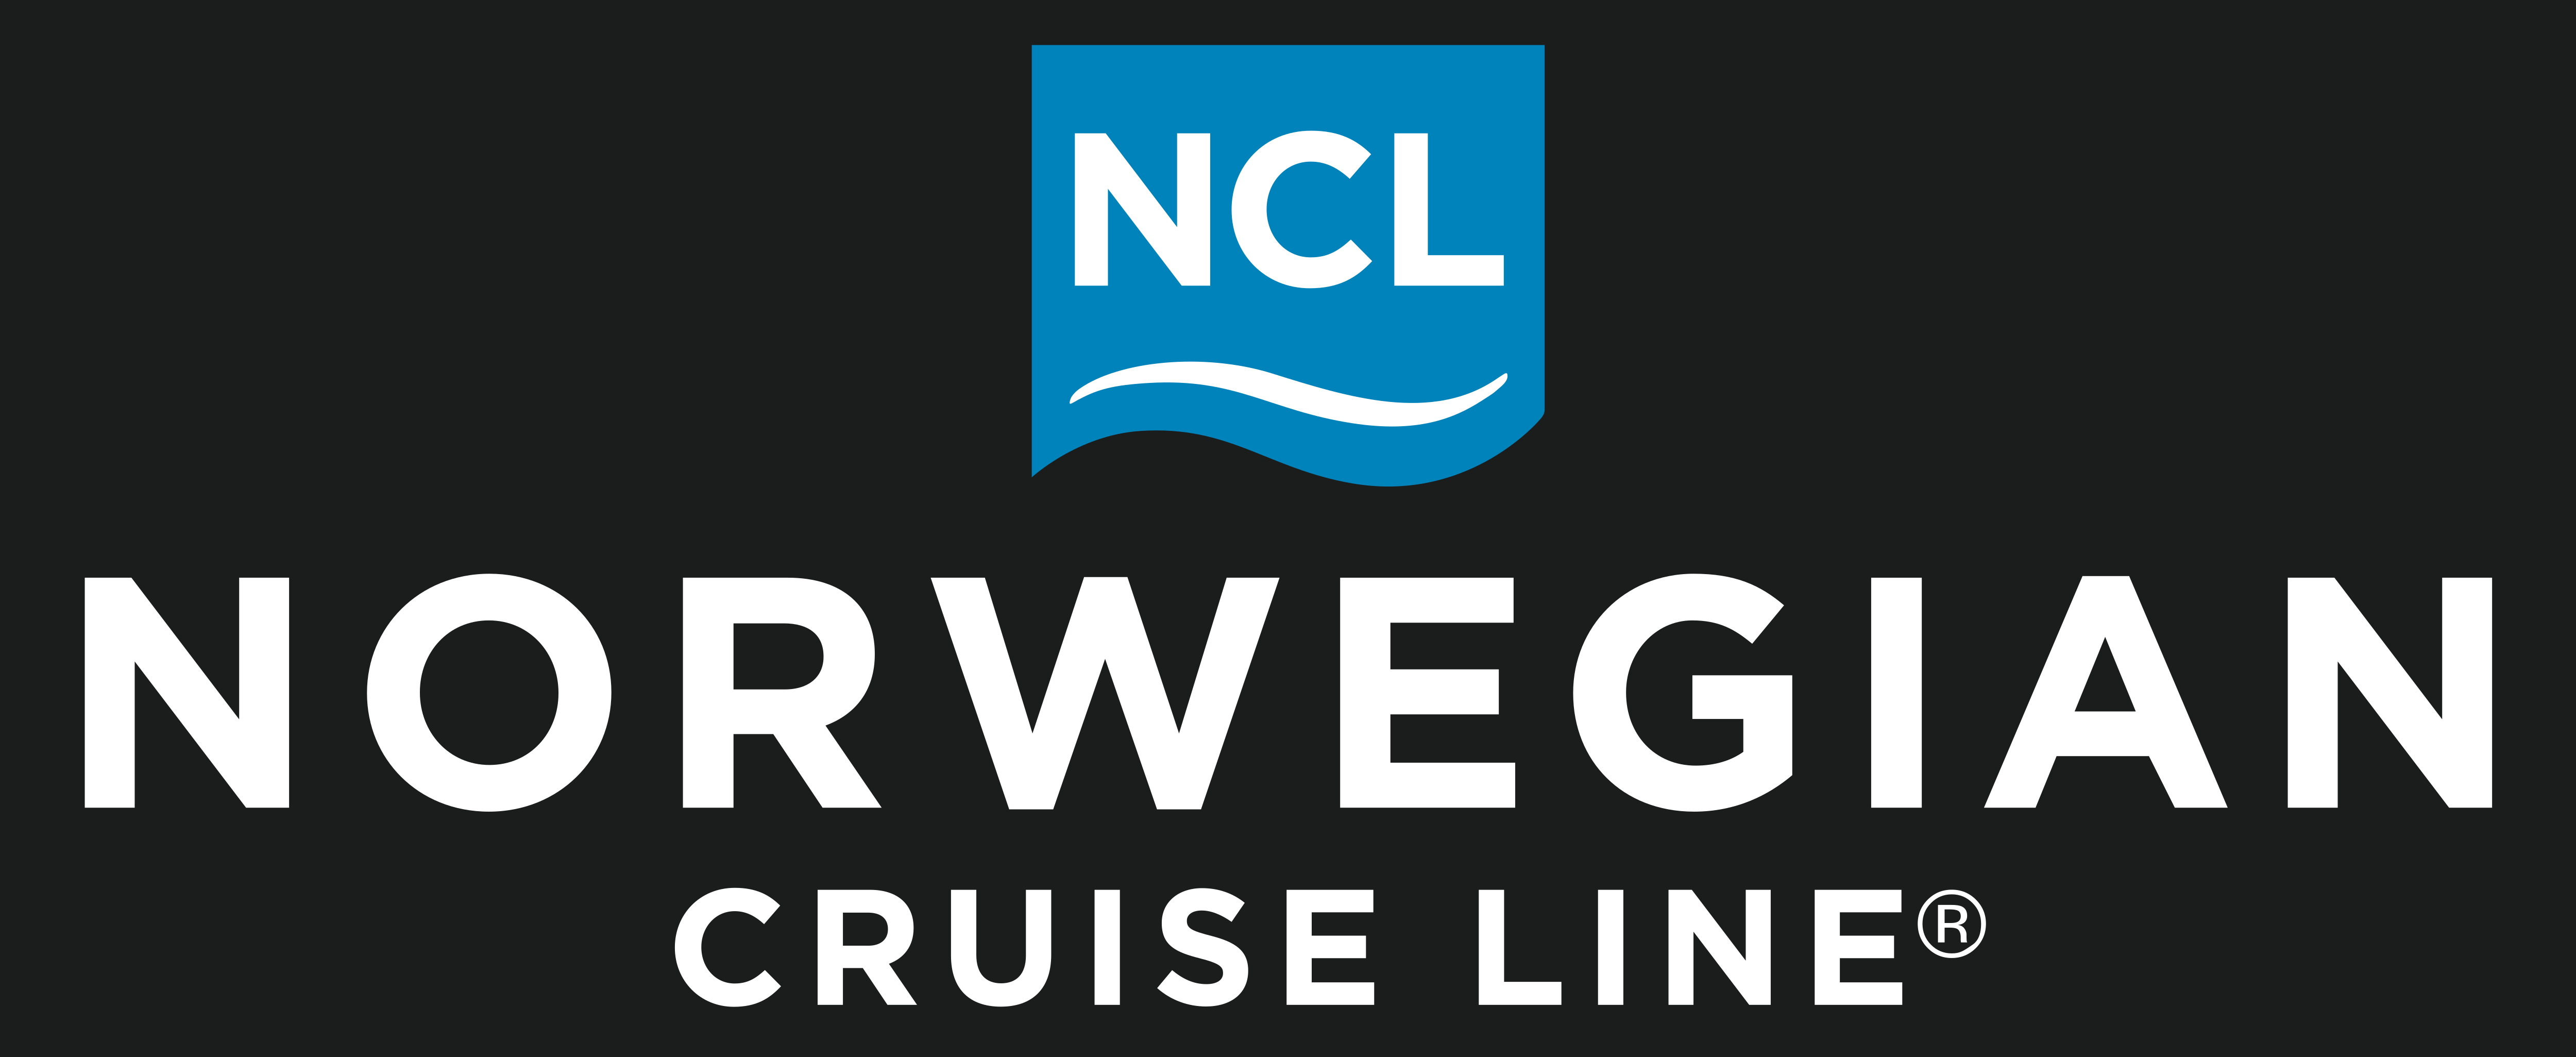 ncl cruise line customer service